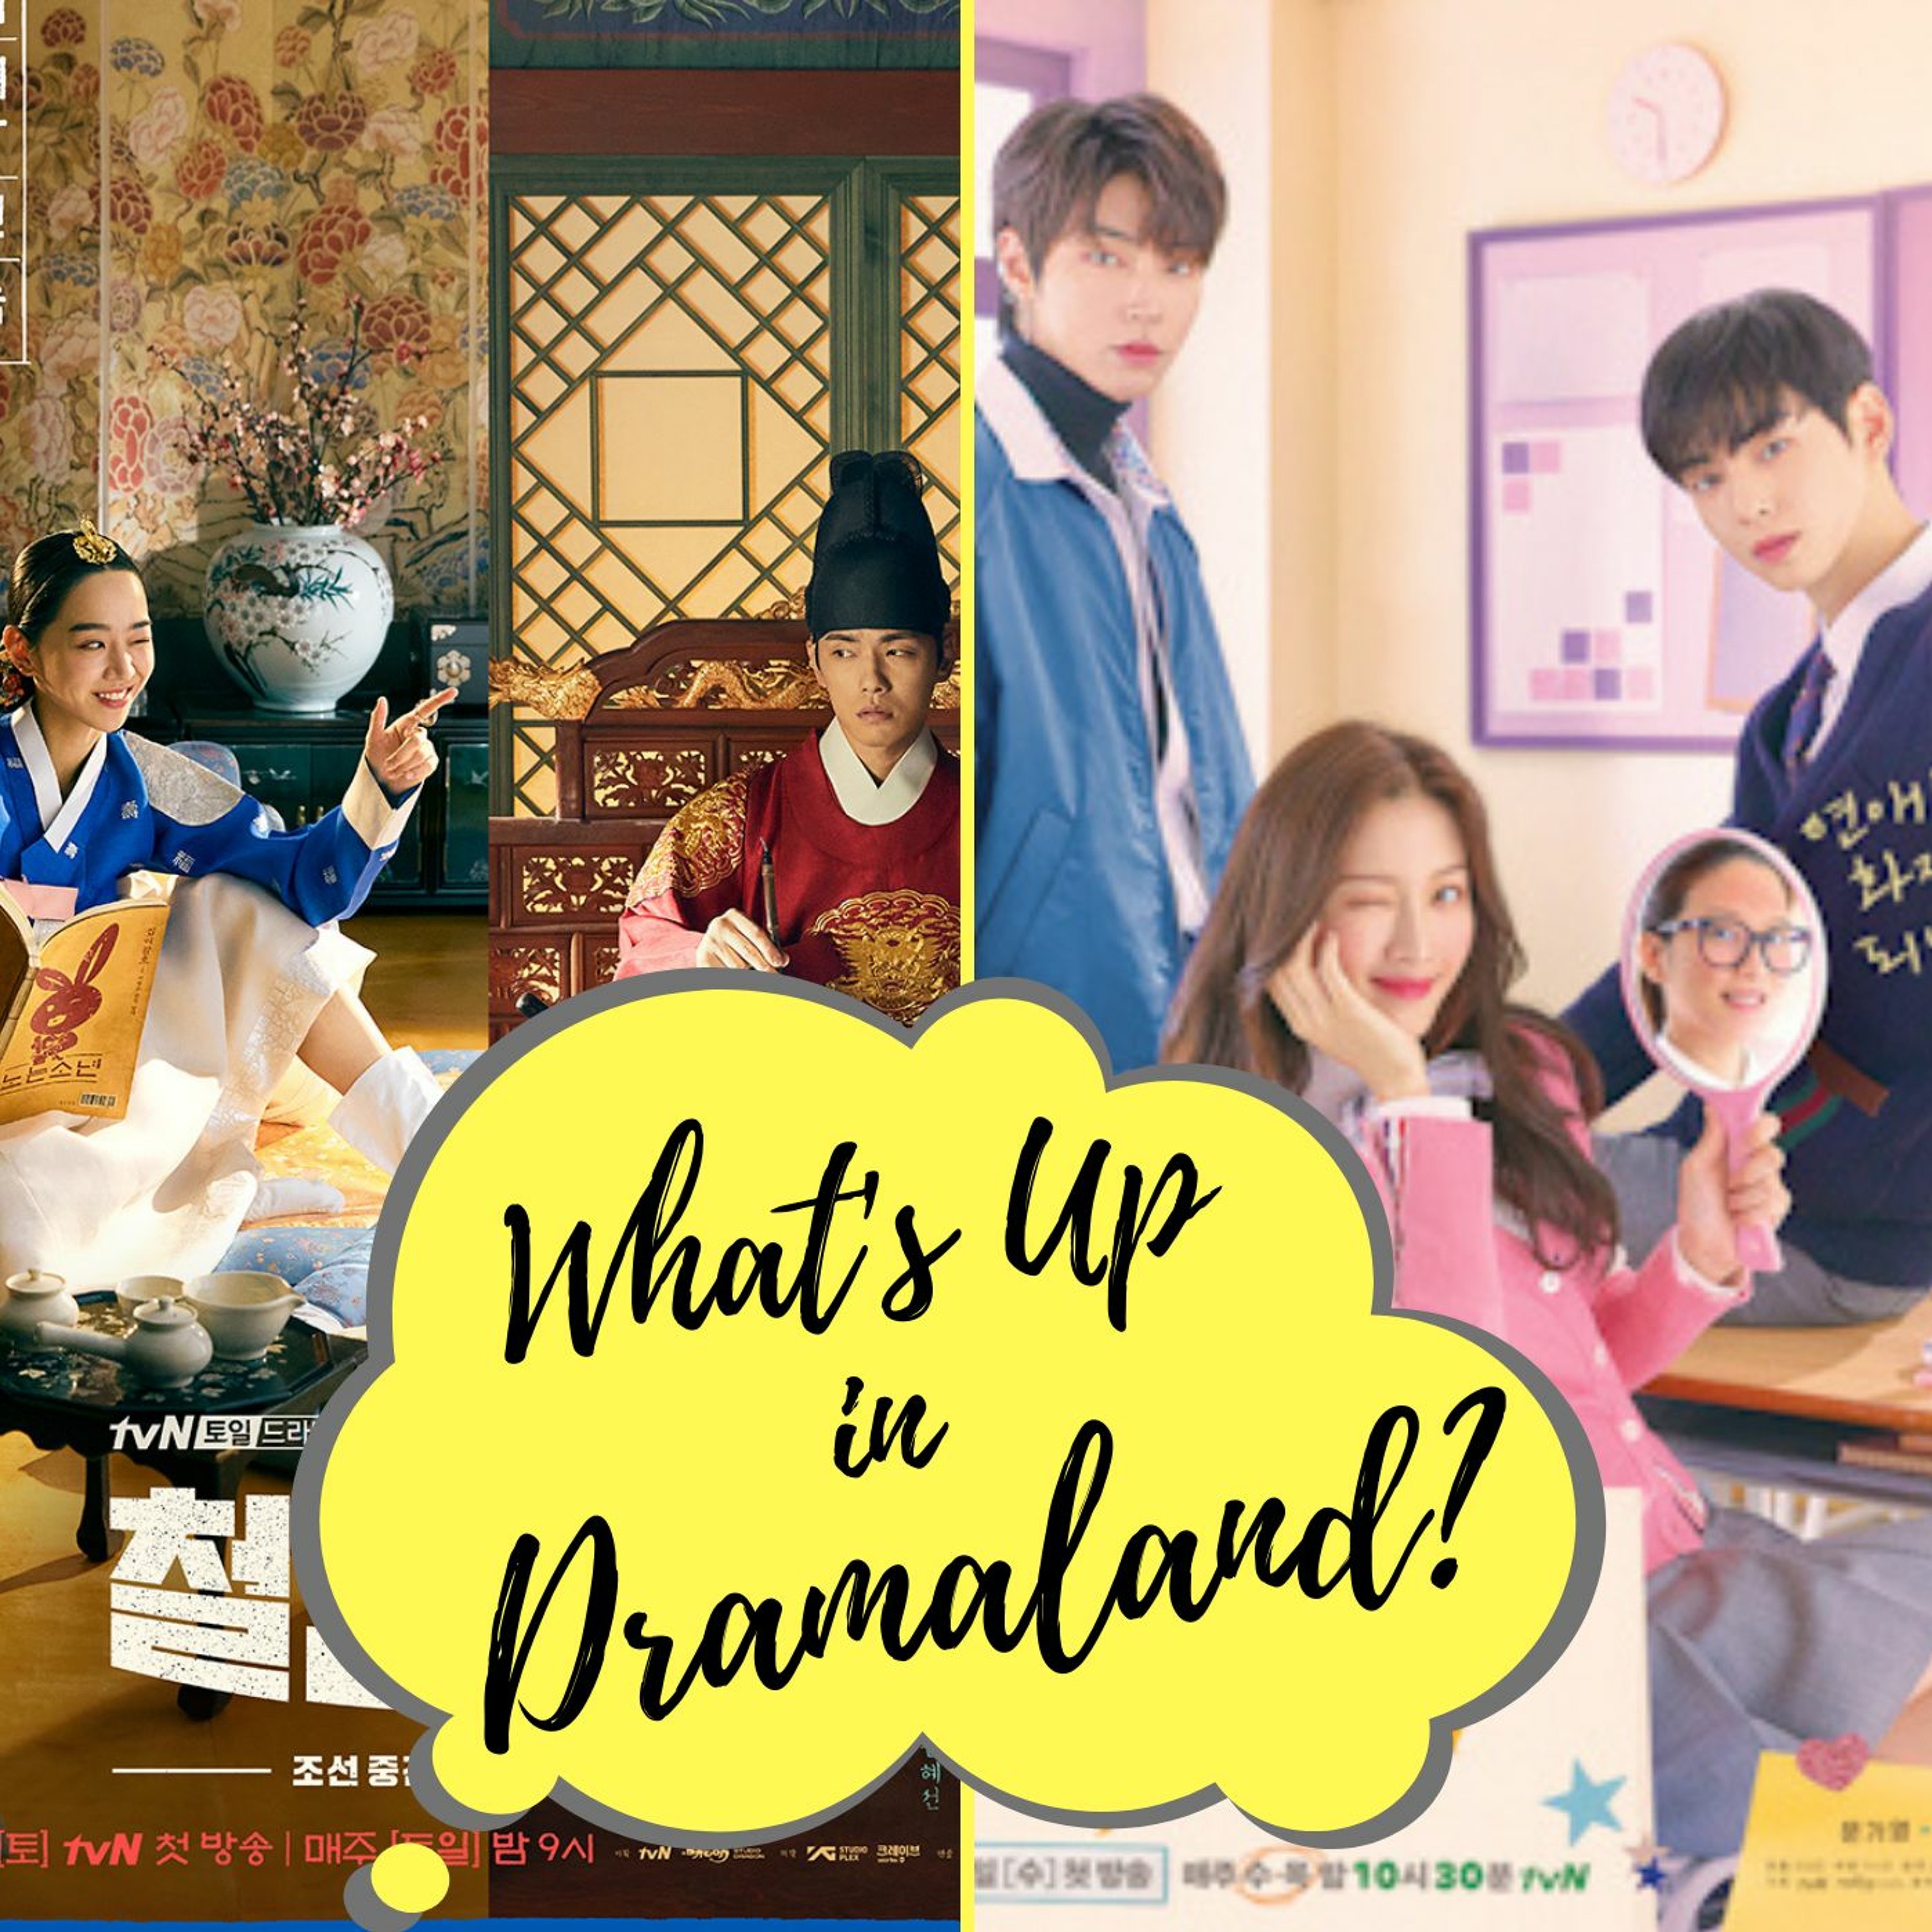 79. Fewer Dramas Next Year | Upcoming: True Beauty, Mr. Queen, Dramaland 2